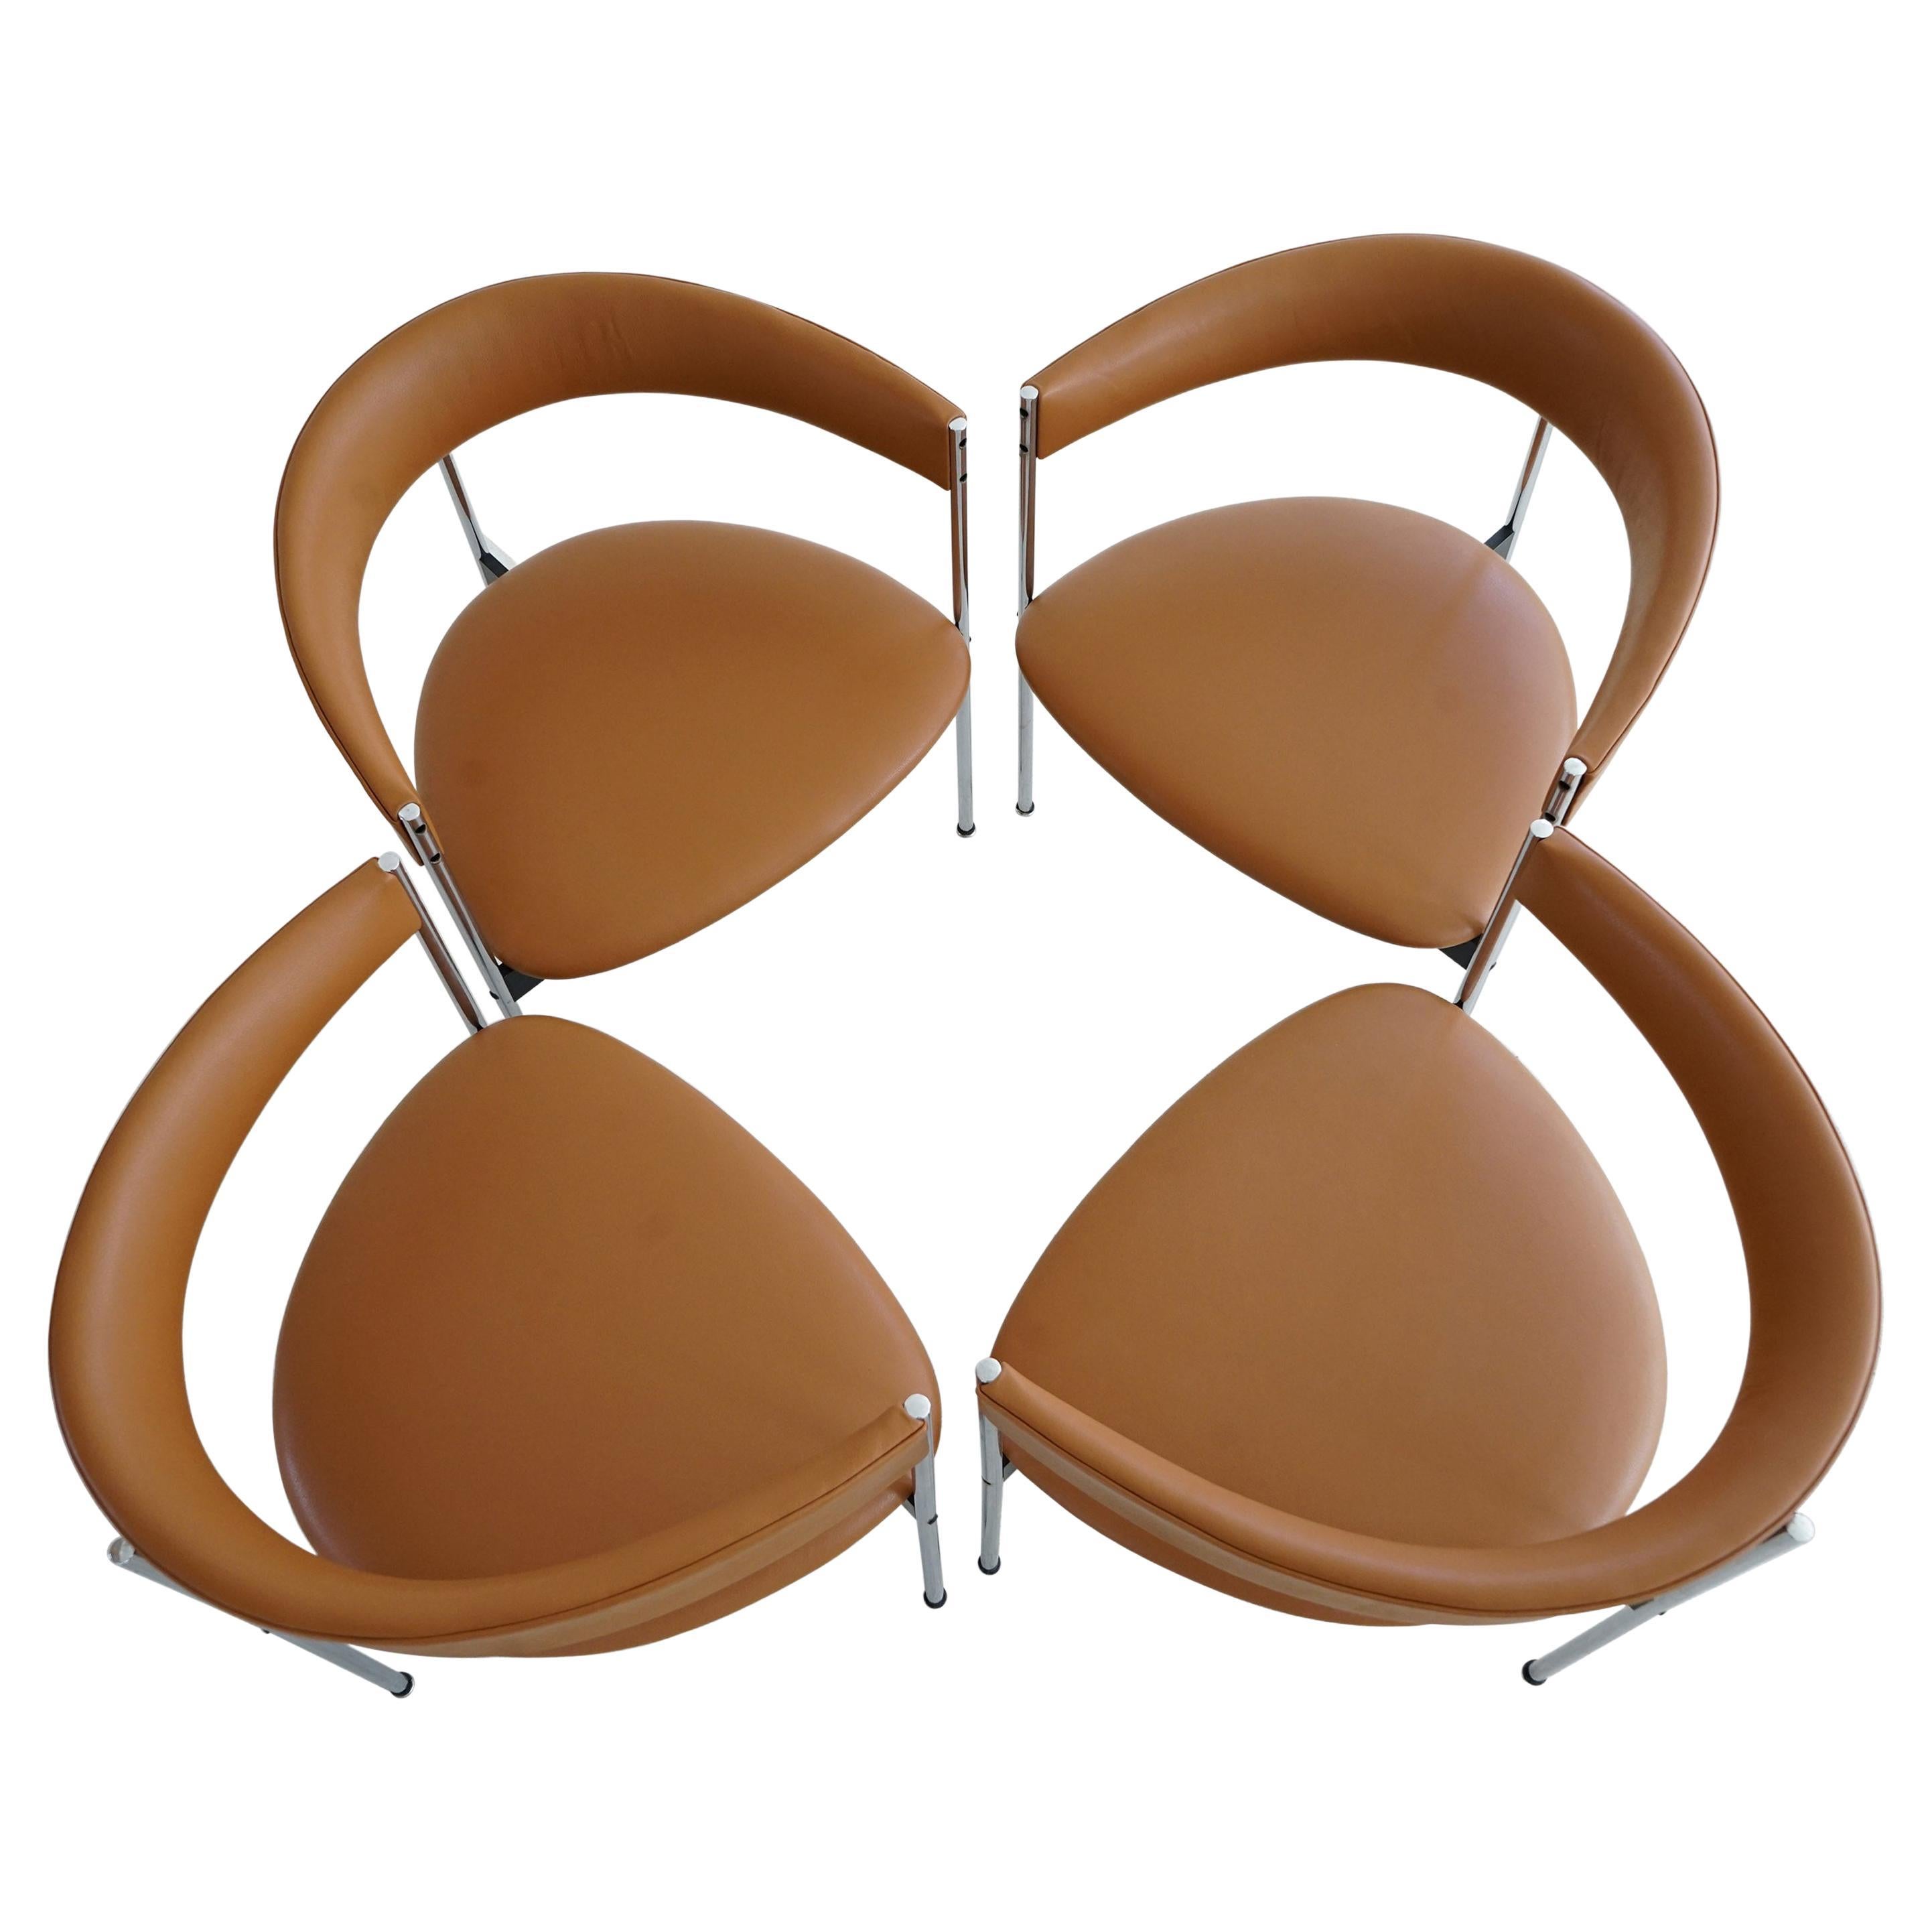 Four Mid-Century Three-legged Chairs by Dieter Waeckerlin for Idealheim, 1970s For Sale